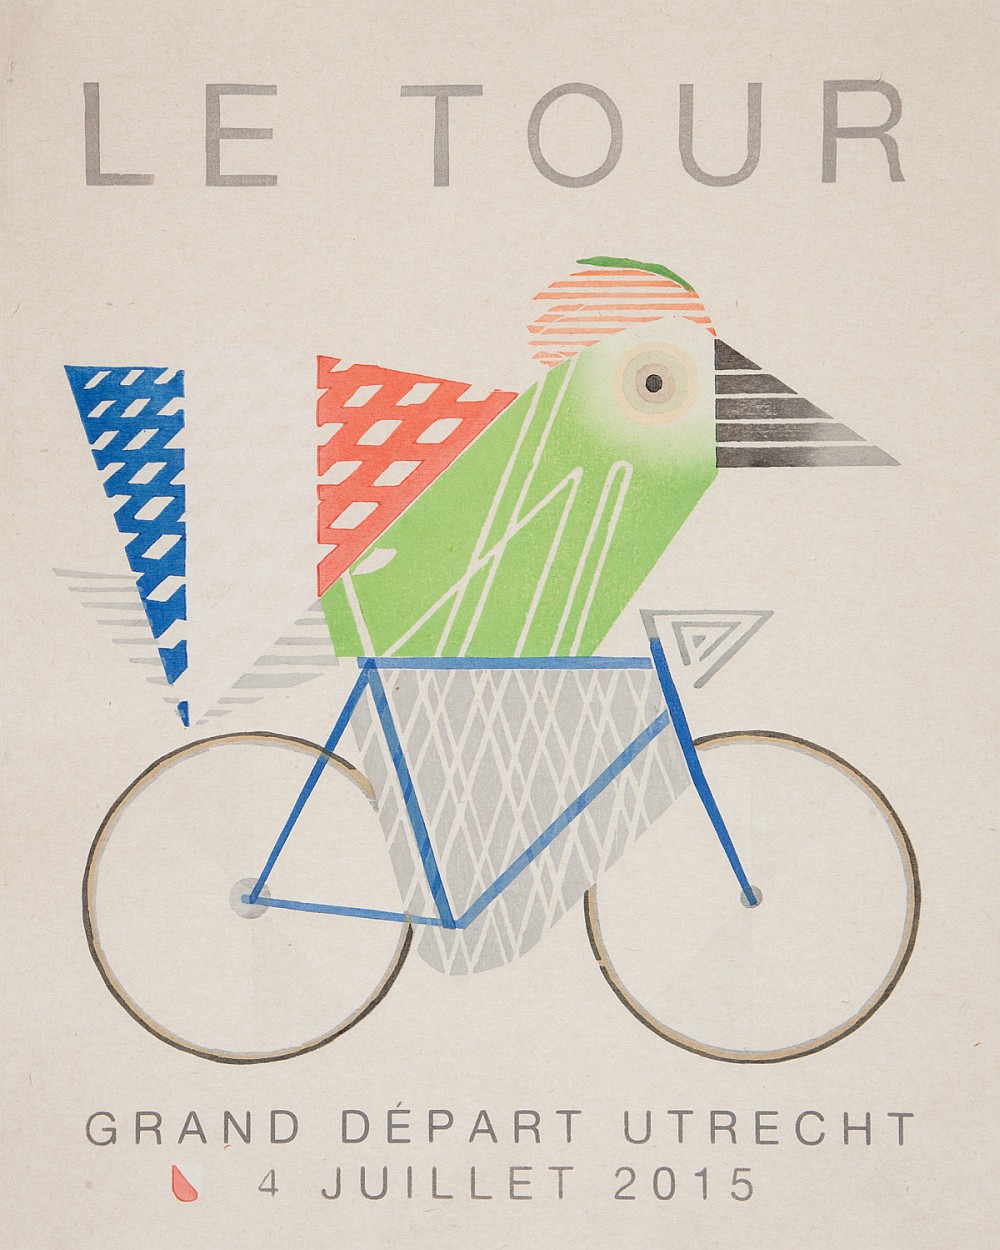 Full image of artwork Tour de France 2015 - Le Maillot Vert